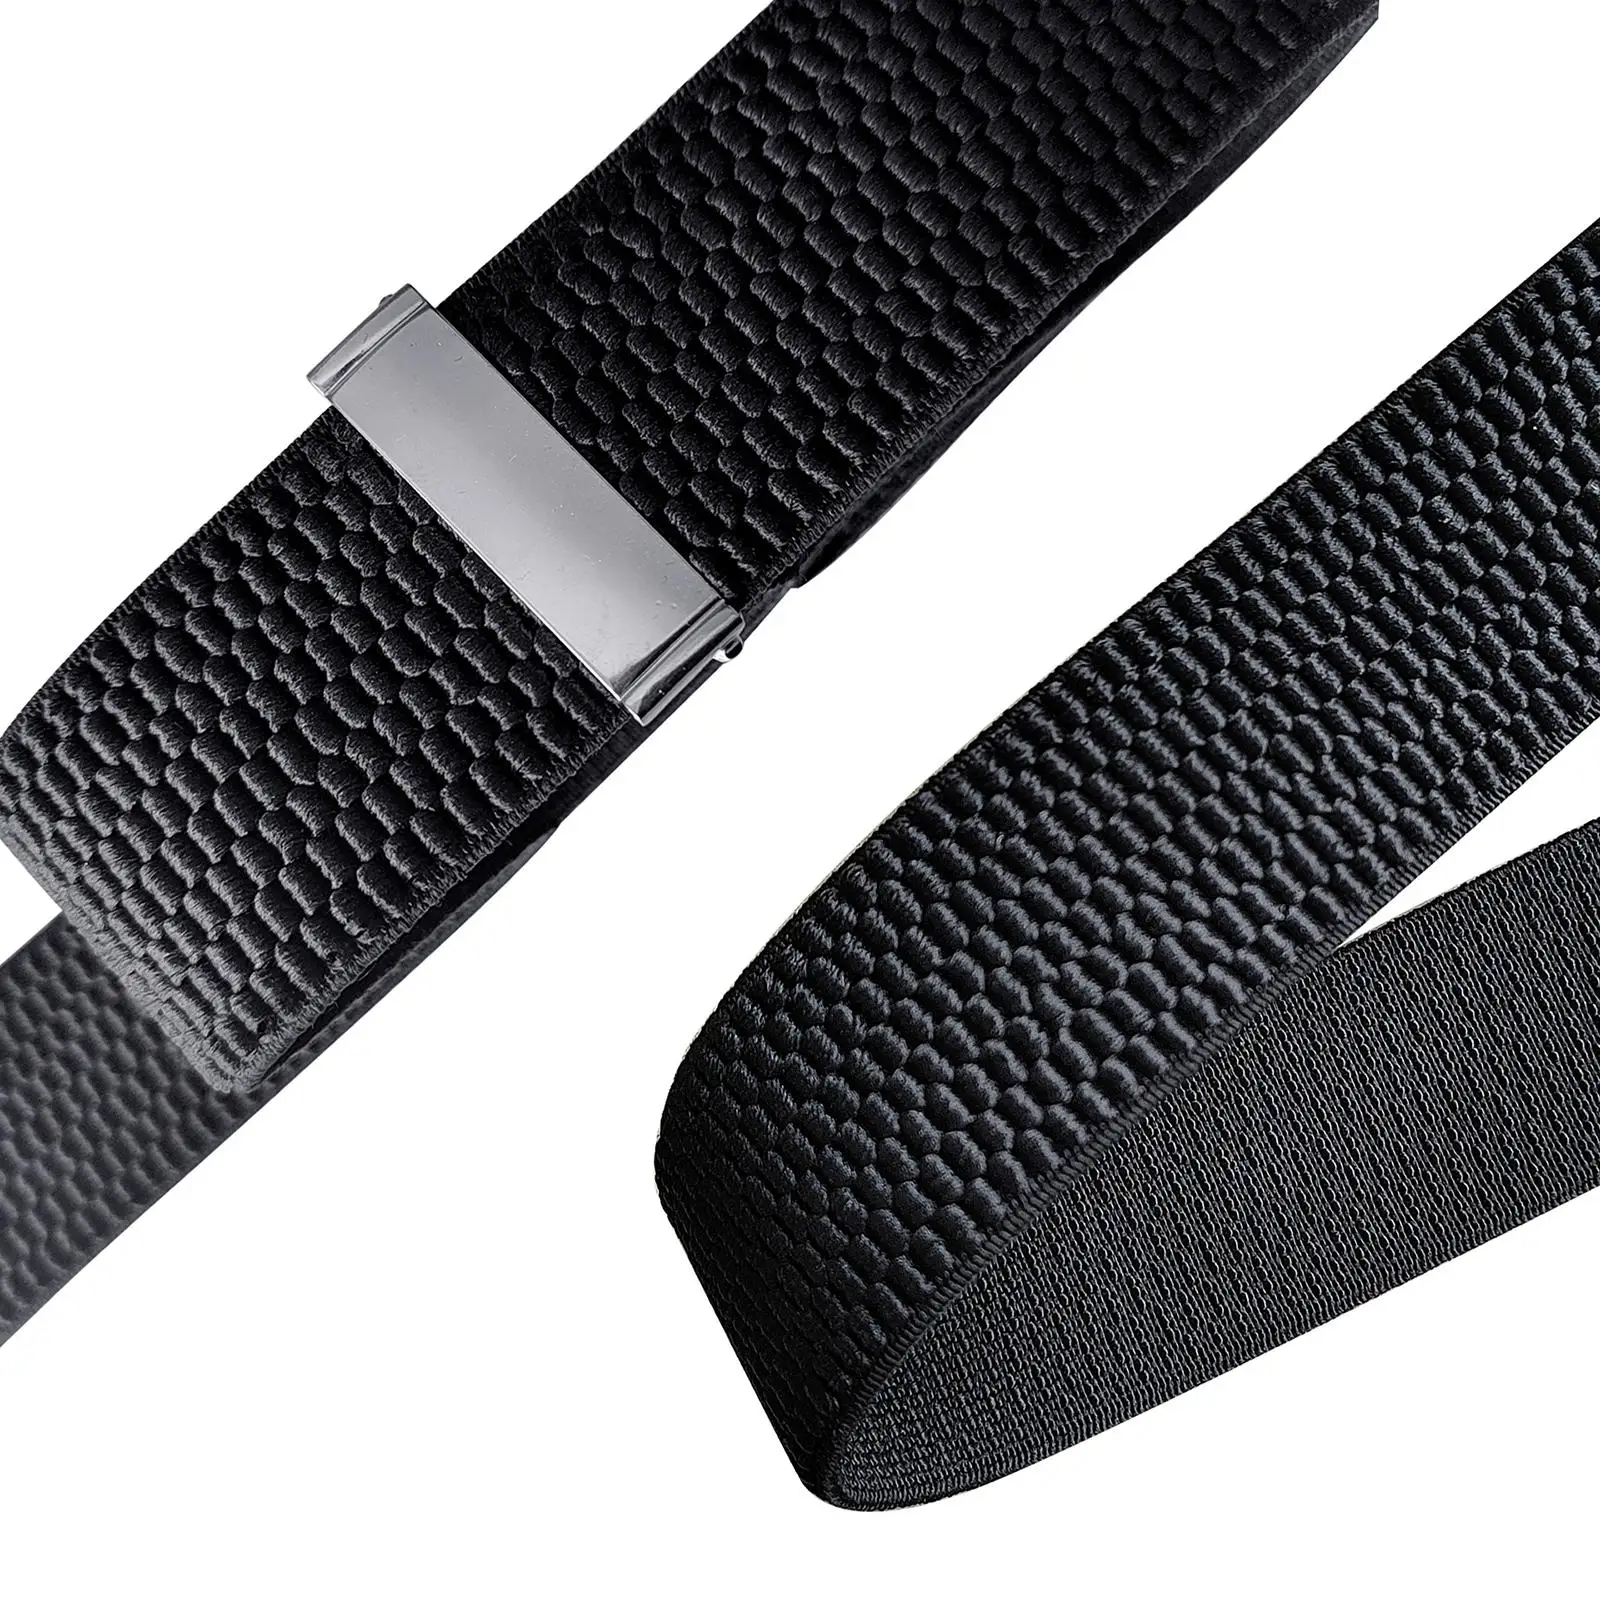 Suspender for Men, X Shaped Construction Elastic Wide Suspenders Adjustable